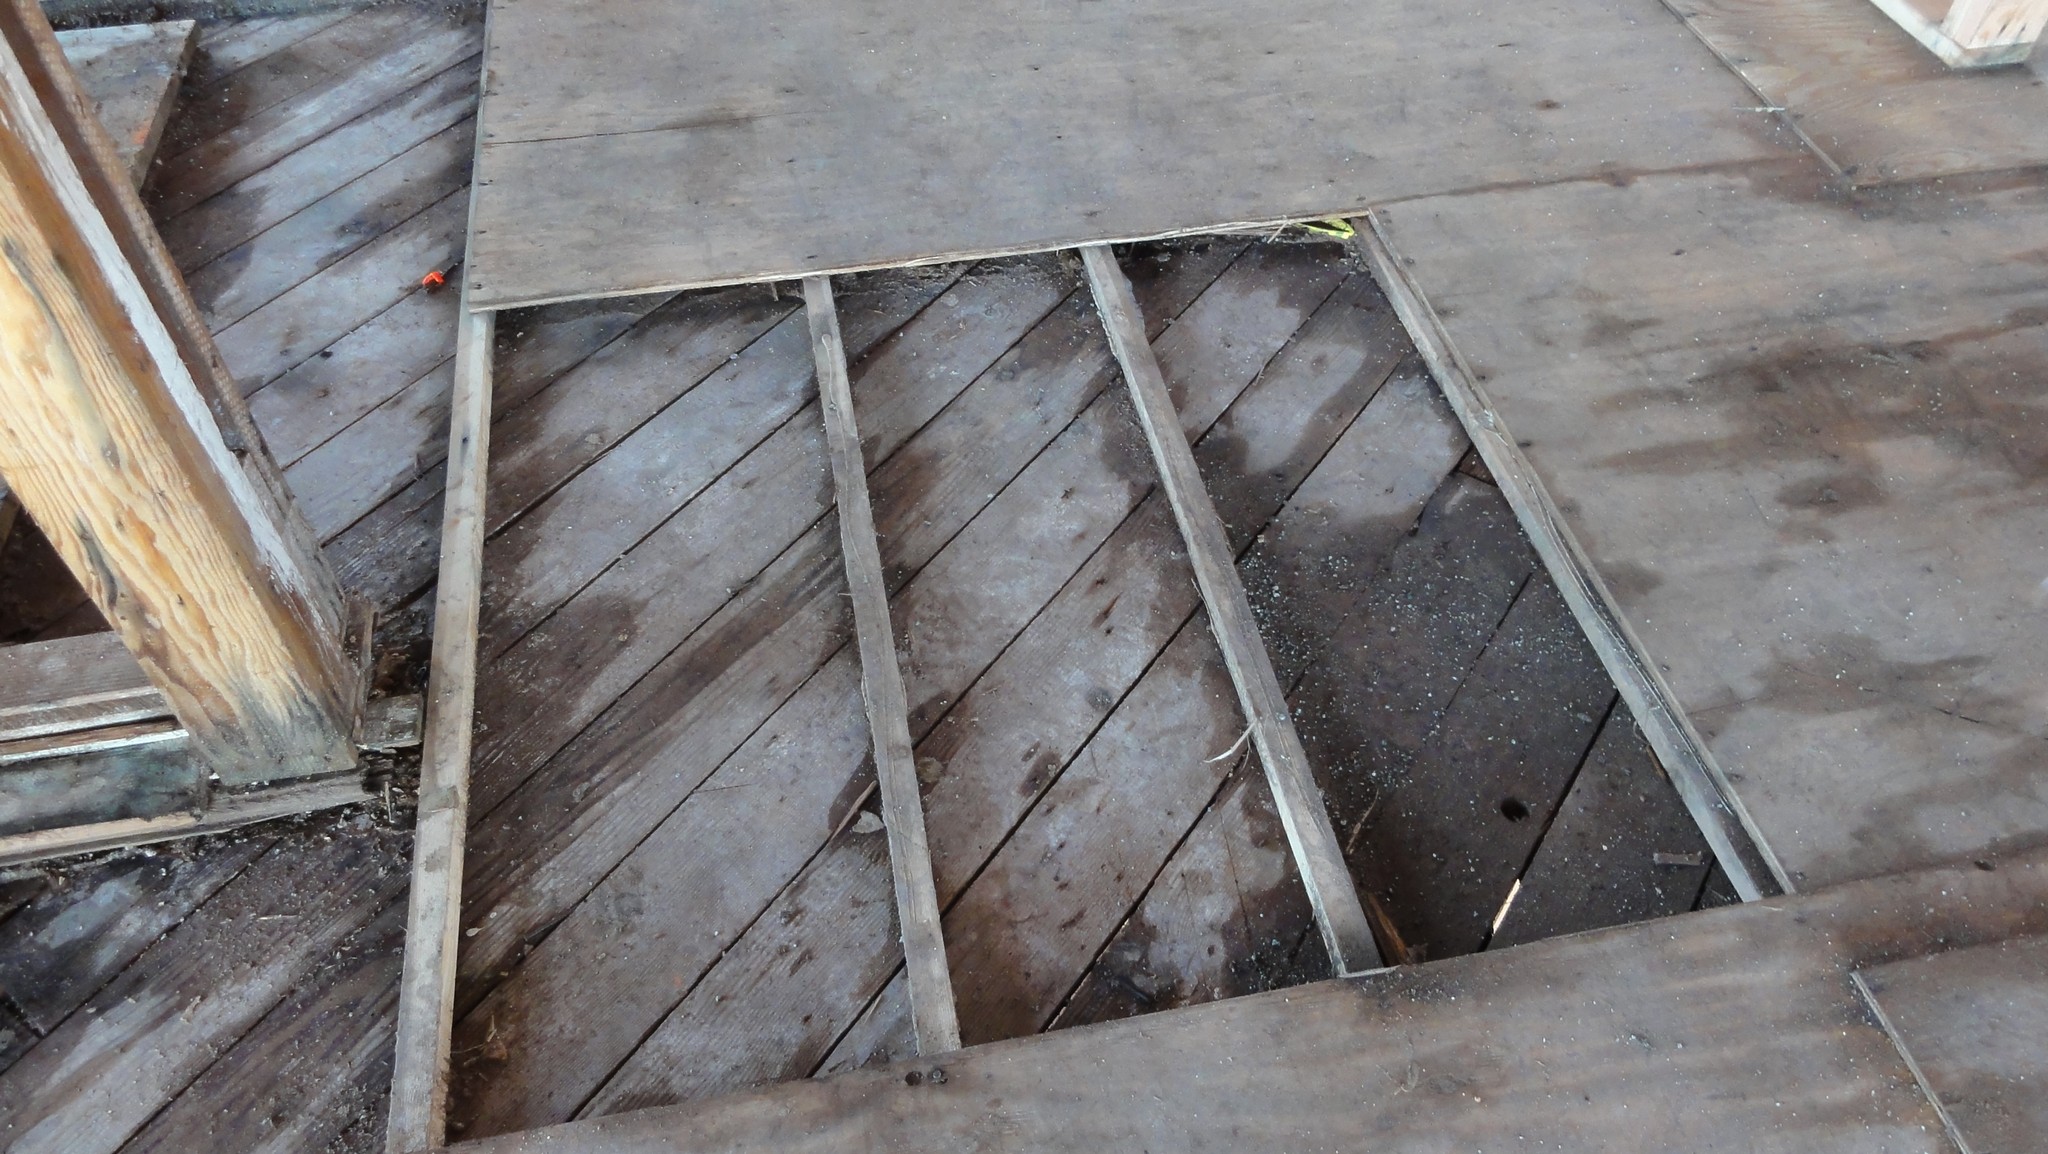 Rain water penetrated beneath the plywood subfloor